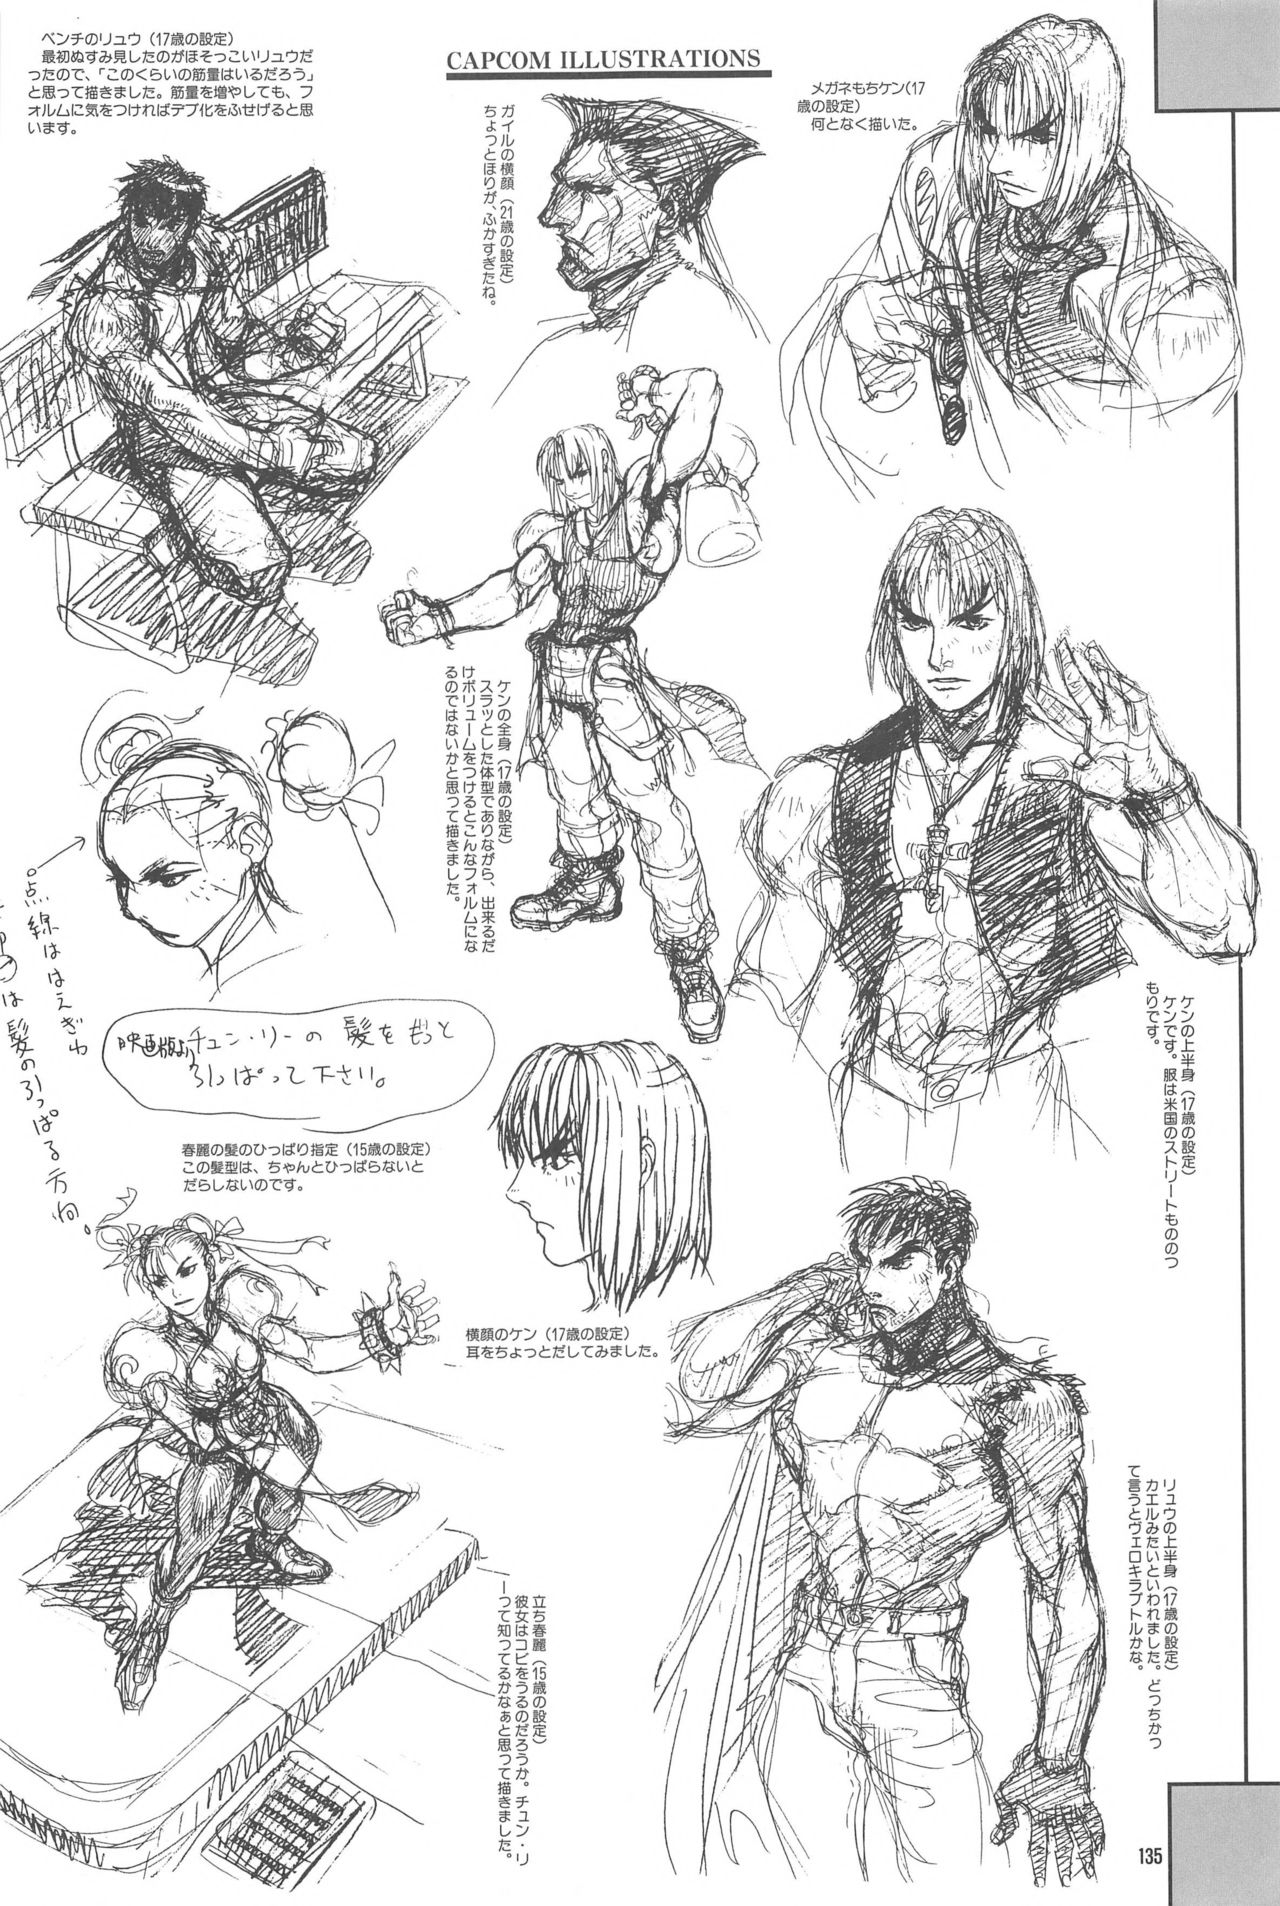 Capcom Illustrations - Gamest Mook 17  [High Quality] 138